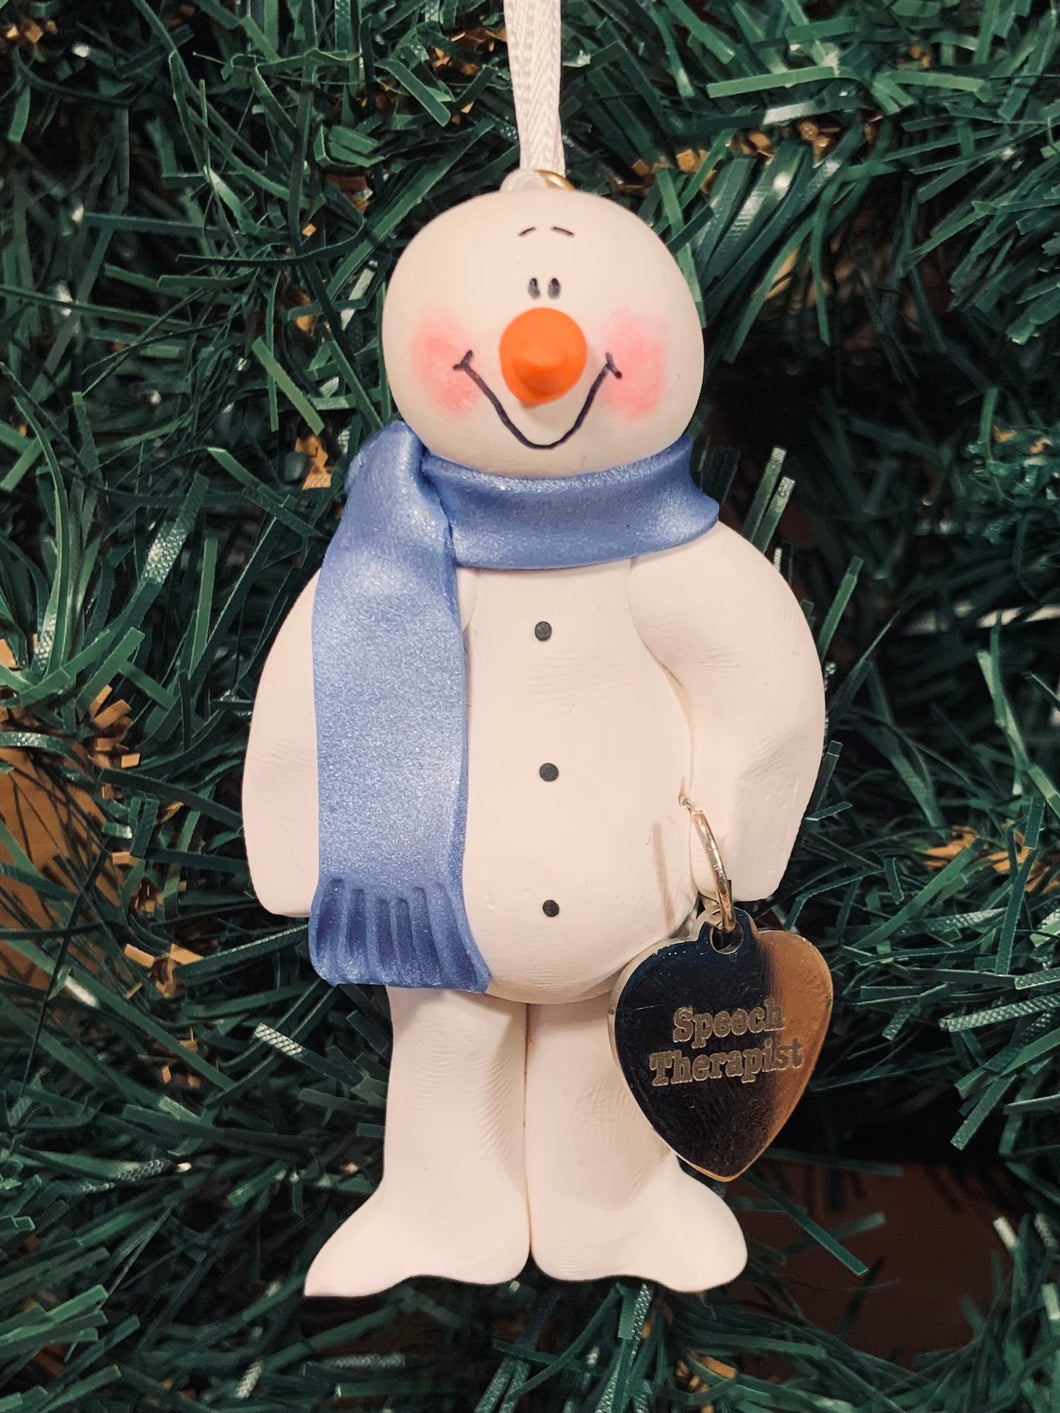 Speech Therapy Snowman Tree Ornament